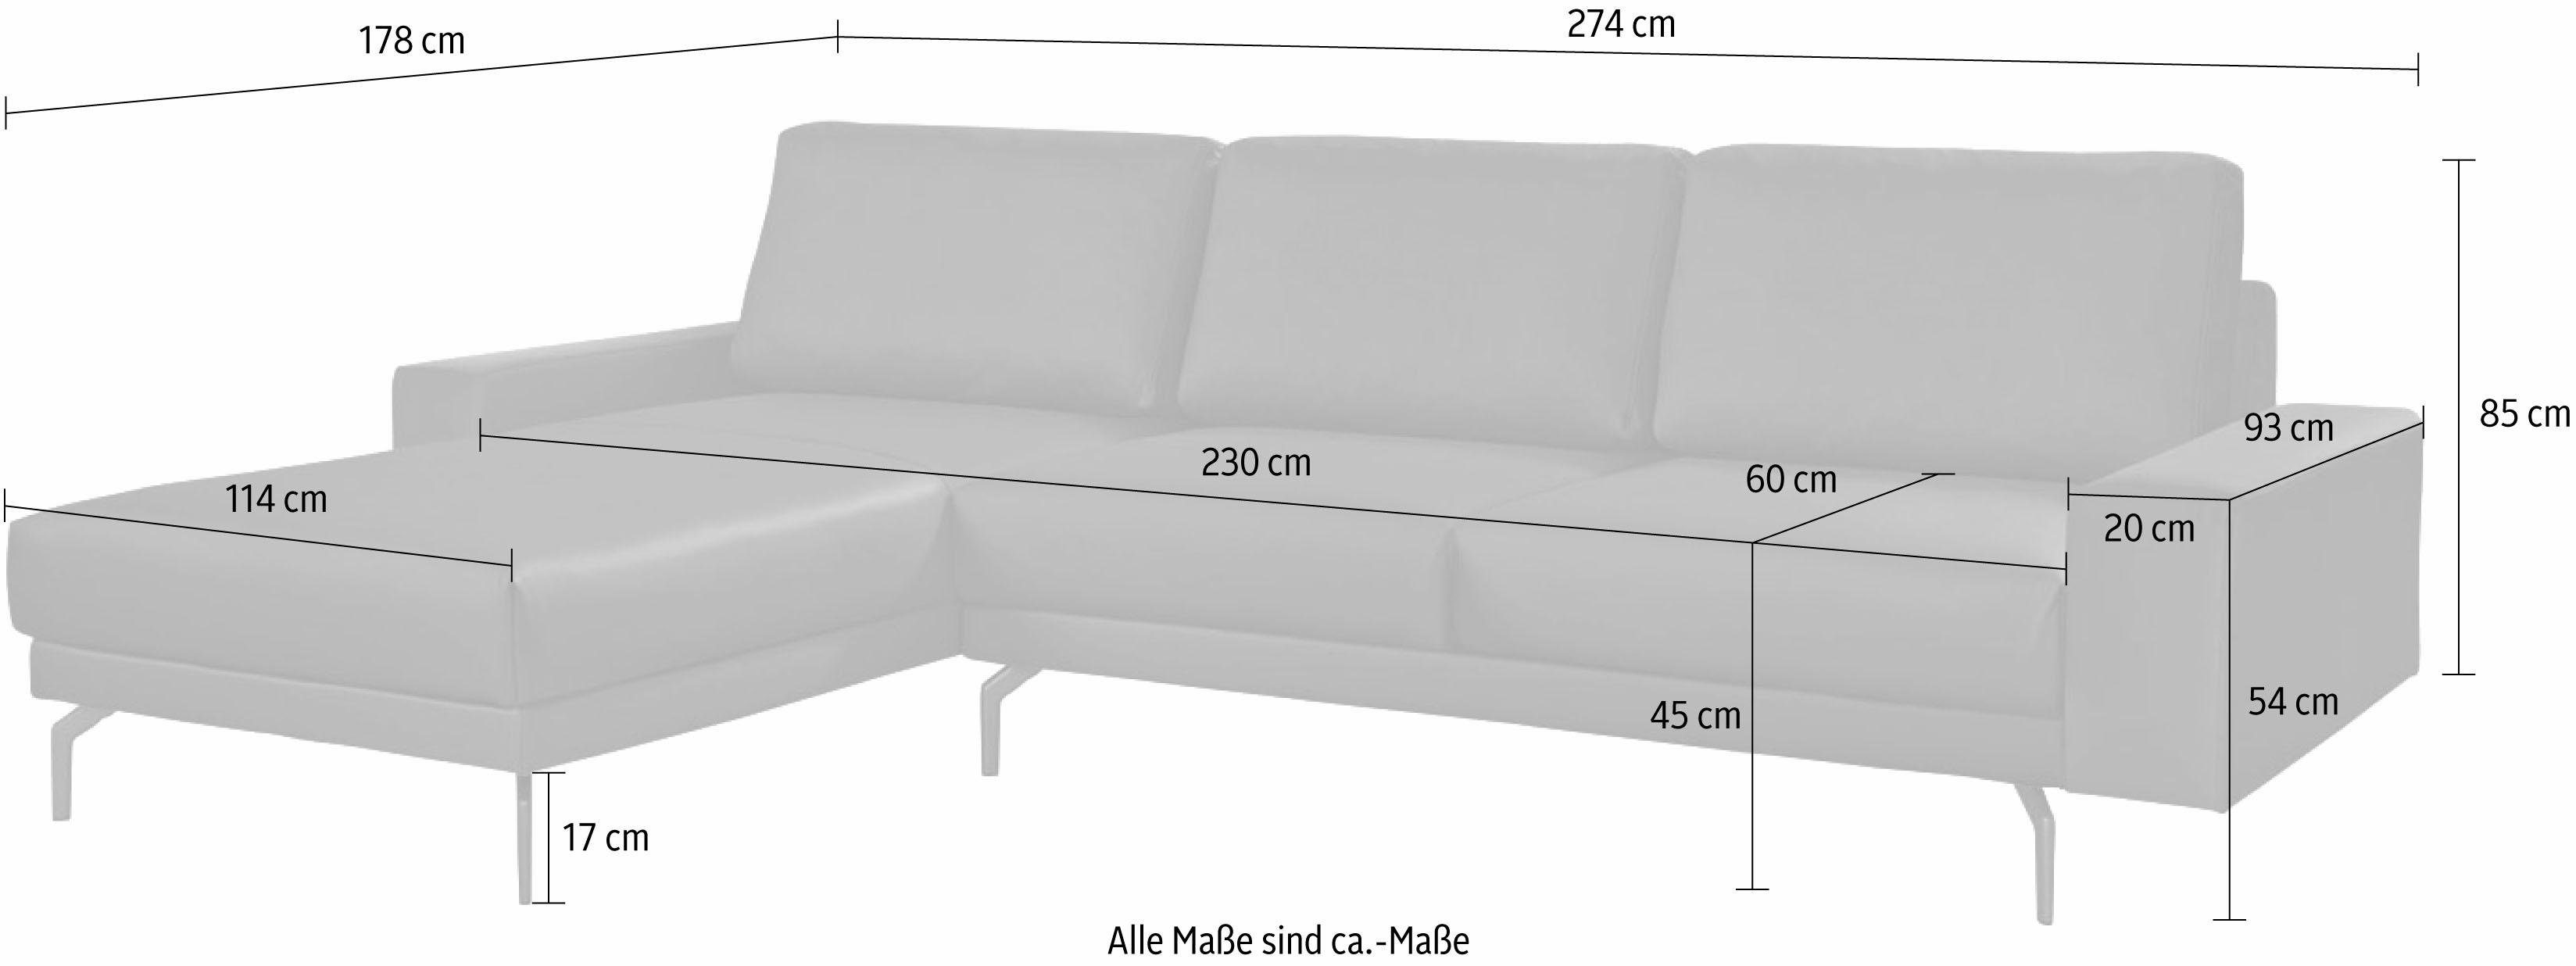 hülsta sofa Ecksofa hs.450, in umbragrau, und Armlehne niedrig, 274 Alugussfüße cm Breite breit